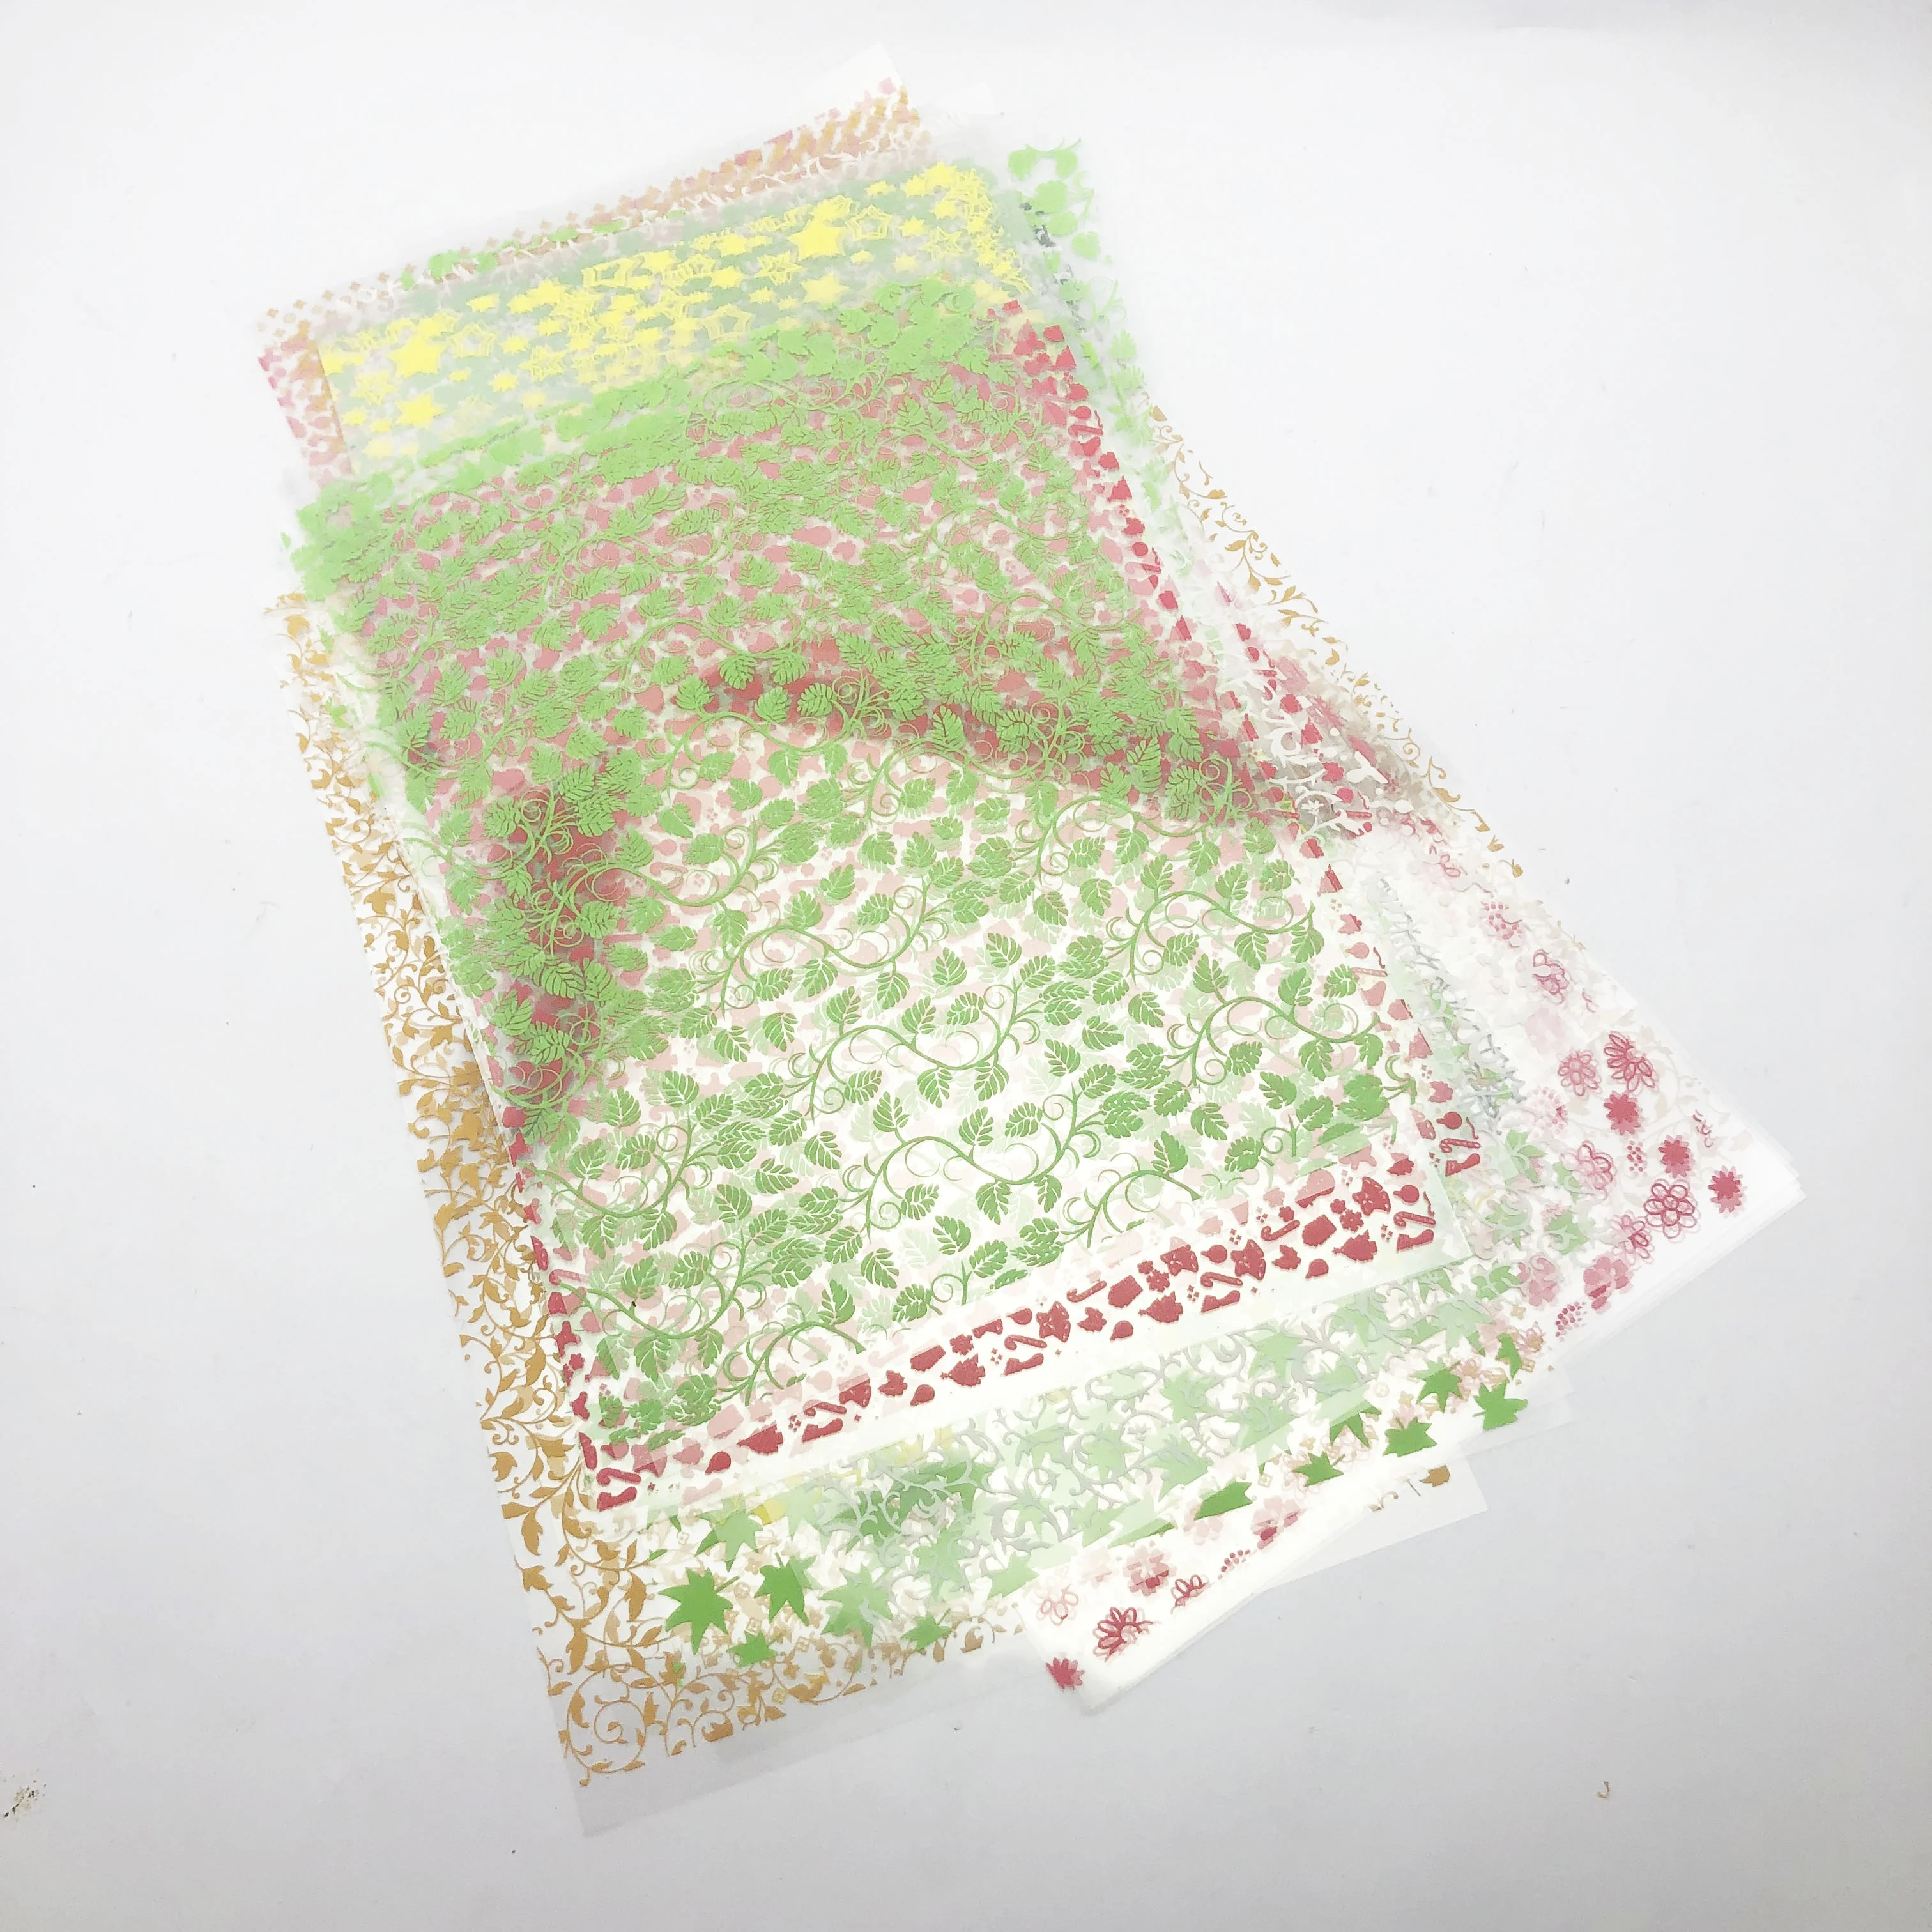  paper2eat edible Miracle Transfer Sheets (formerly Chocolate  Transfer Sheets) 8.5“ x 11” – 10 count – For Edible Paper Printers : Arts,  Crafts & Sewing